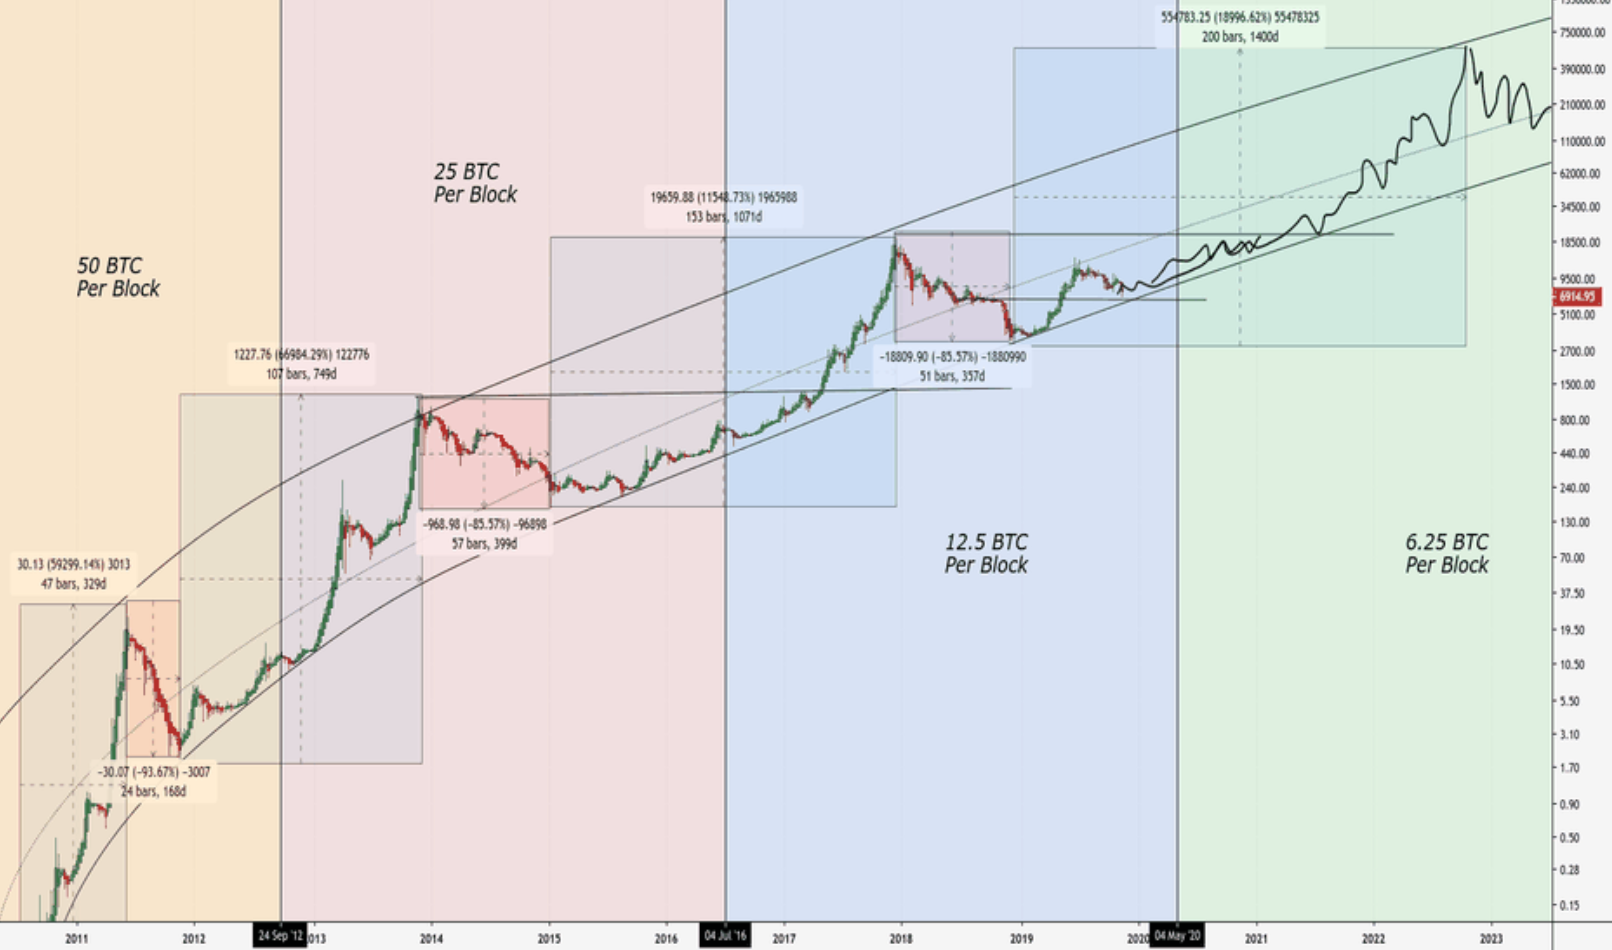 Bitcoin (BTC) Price vs. Halving Cycles